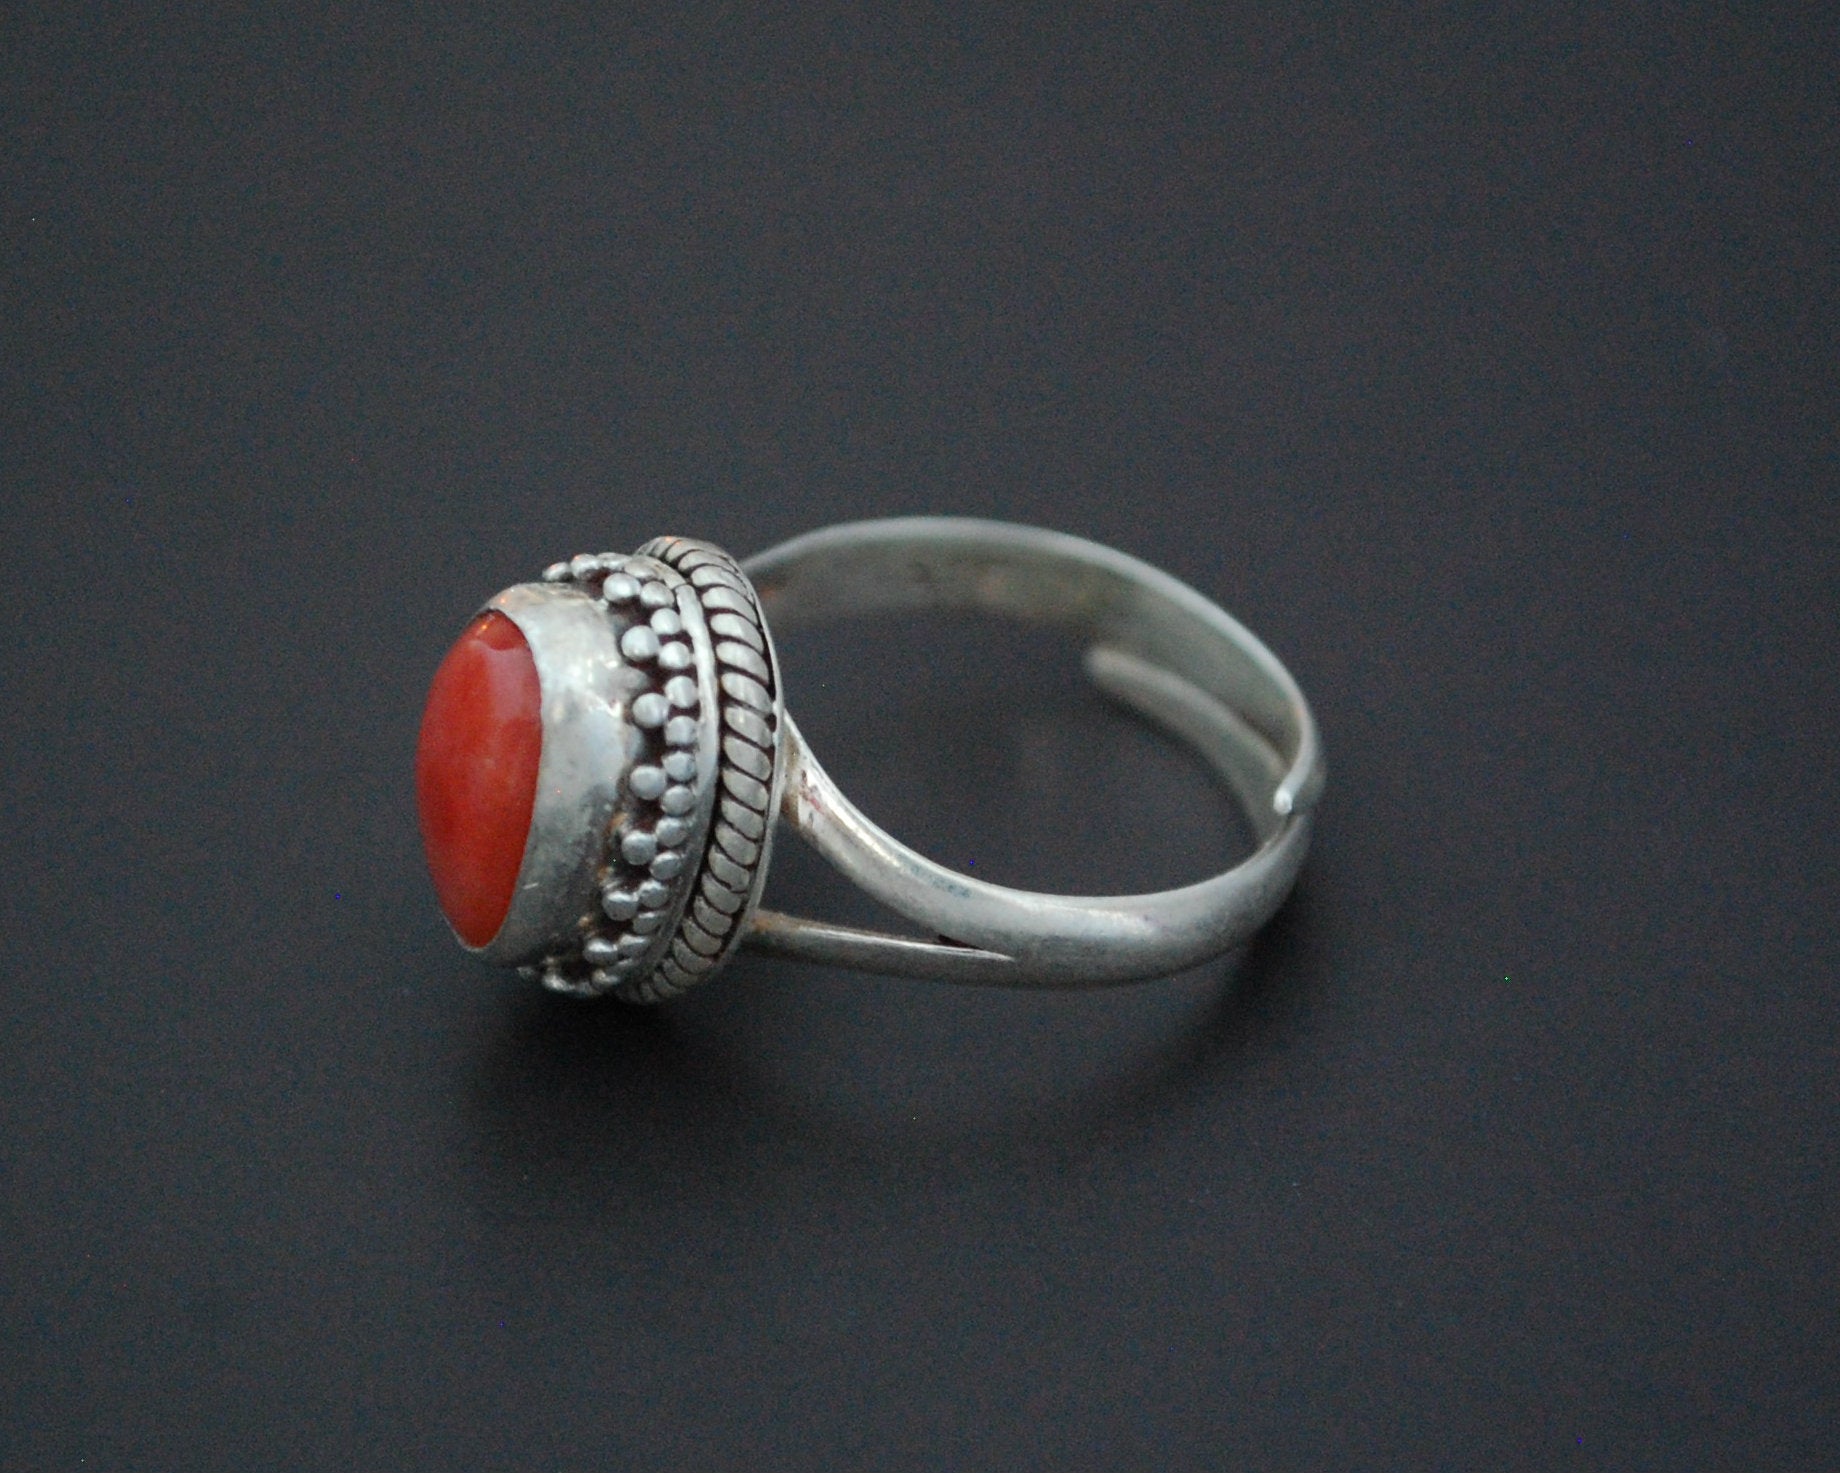 Vintage Nepali Ring - Size 7 / Adjustable